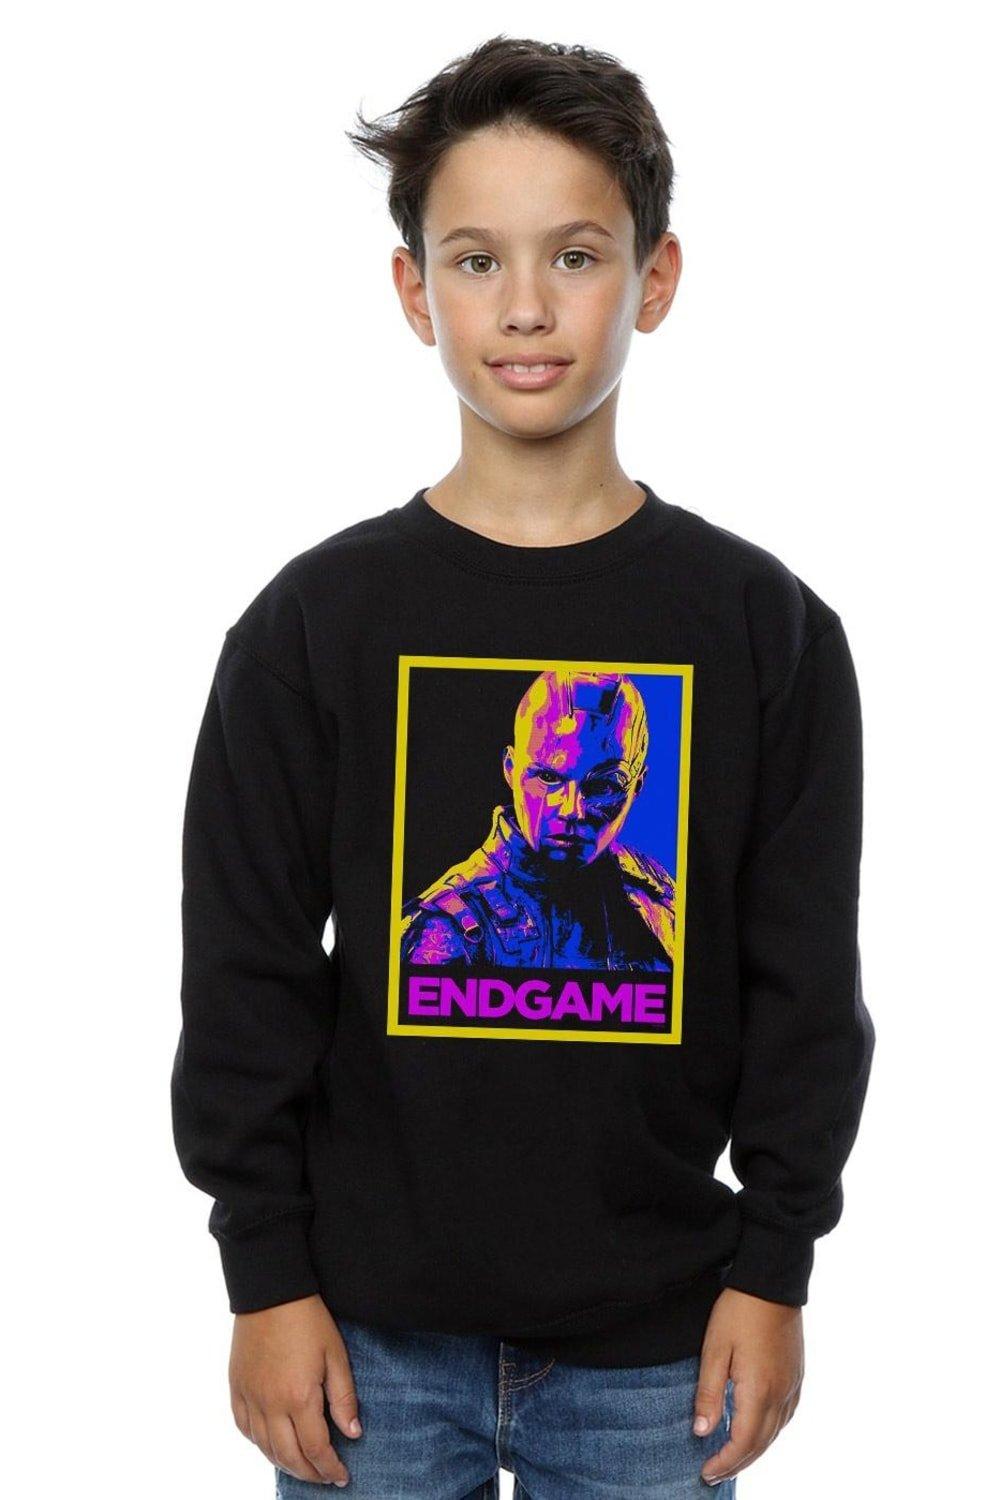 Avengers Endgame Nebula Poster Sweatshirt